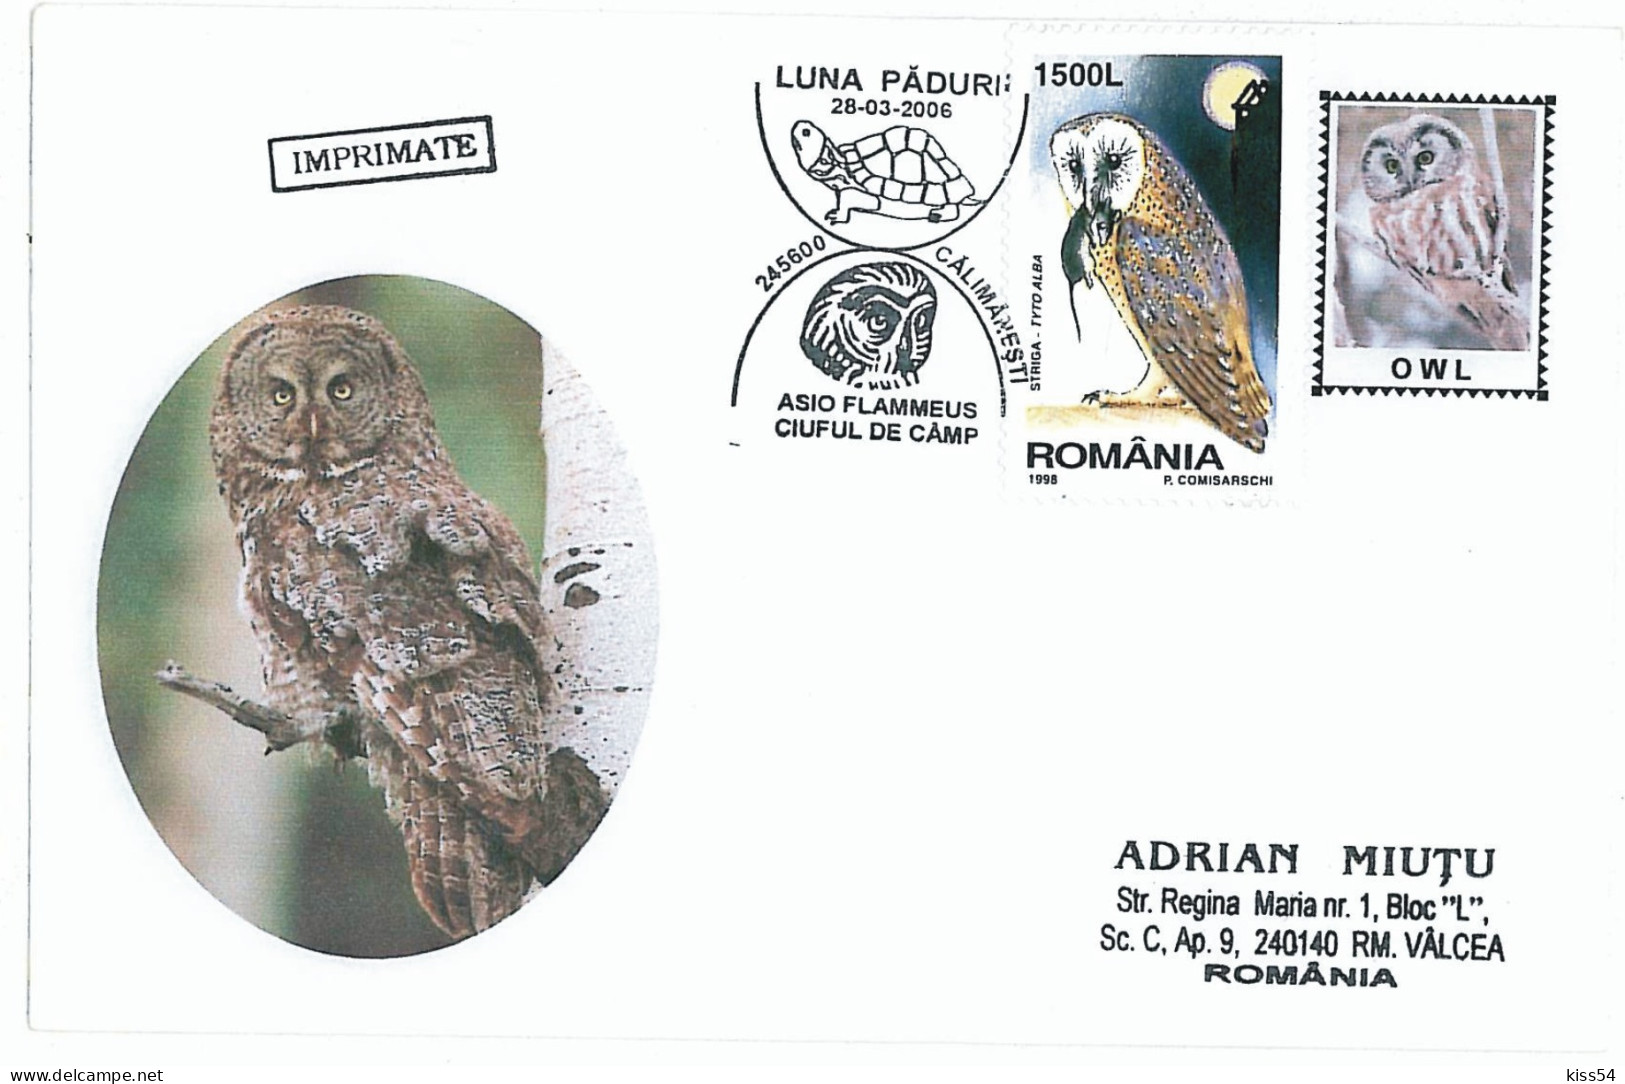 COV 92 - 563 OWL Romania - Cover - Used - 2006 - Owls